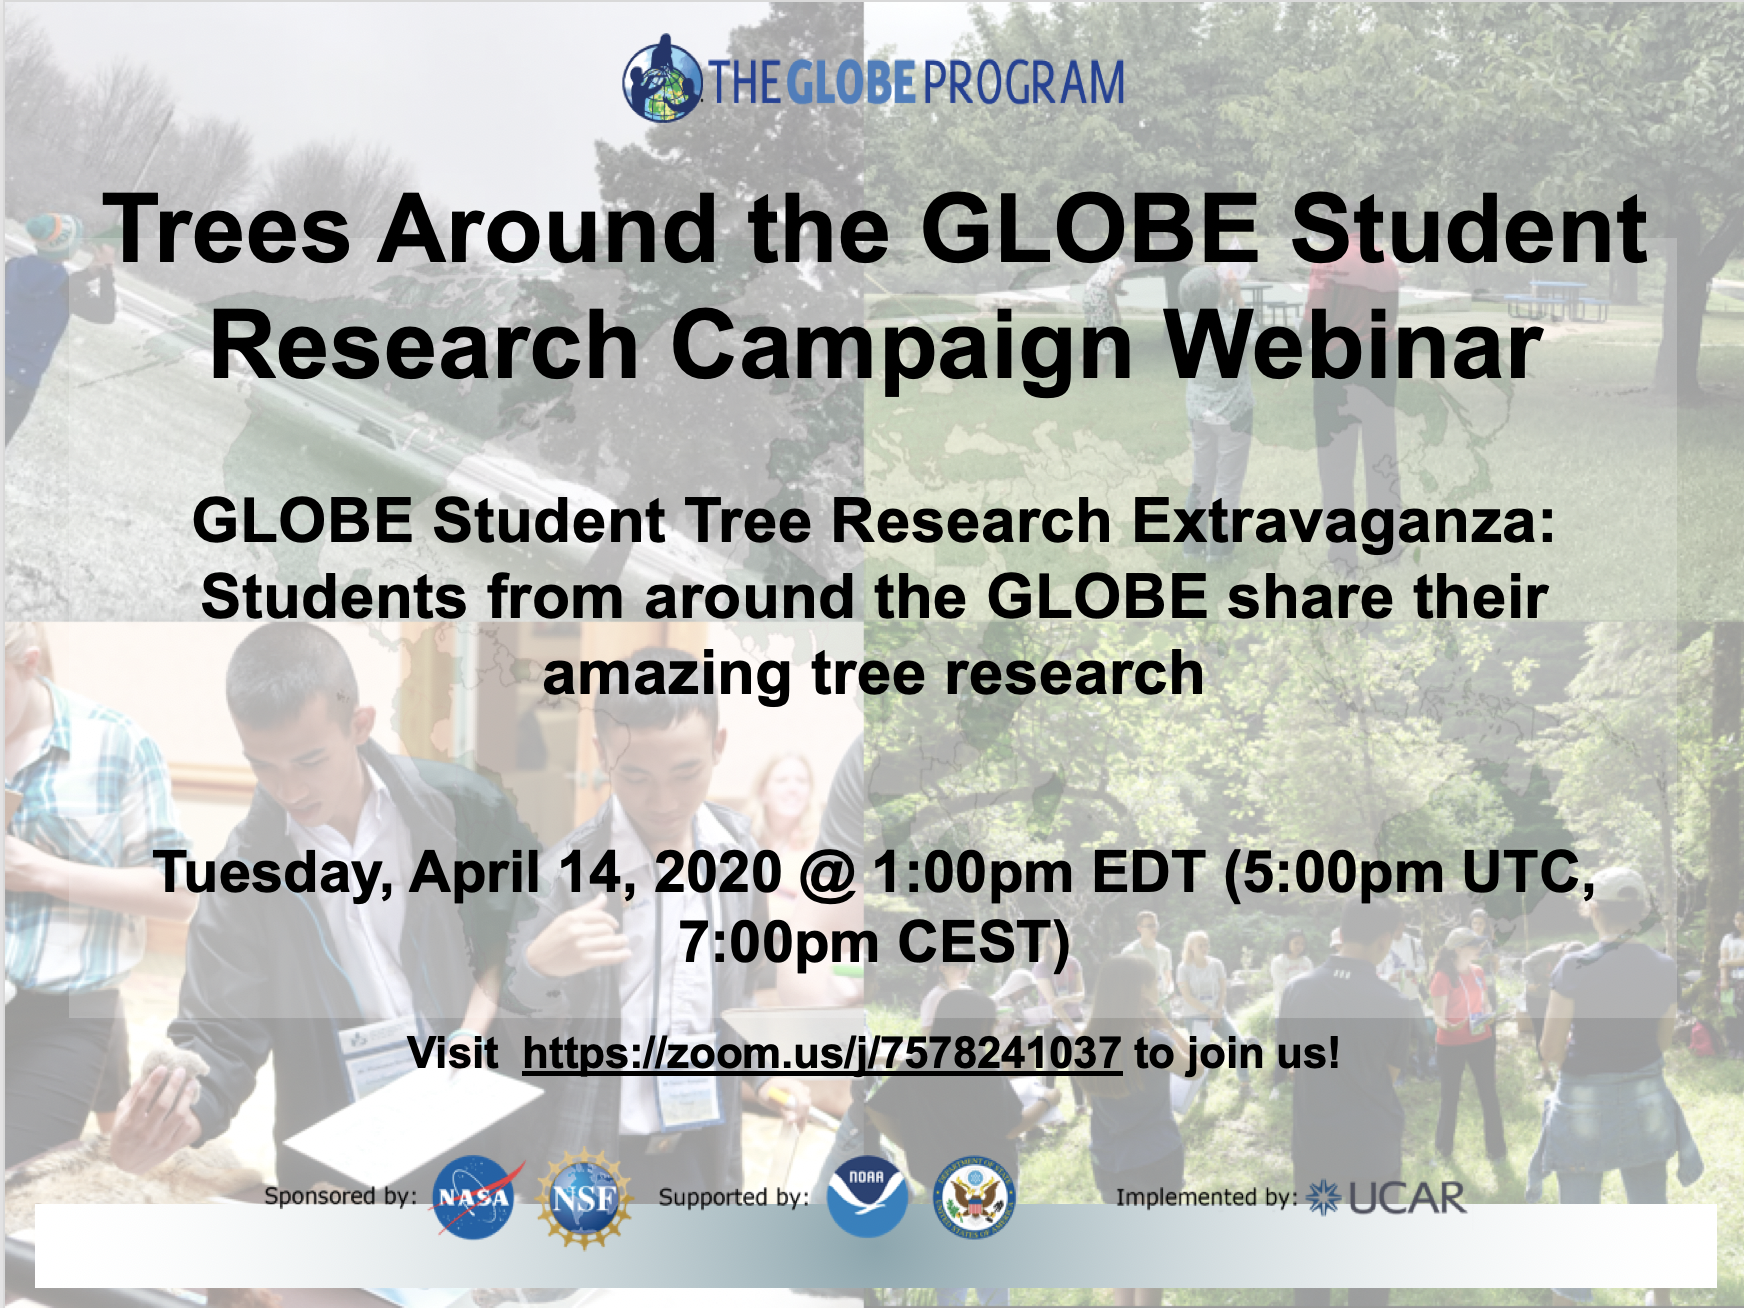 Trees Around the GLOBE 14 April 2020 Webinar shareable